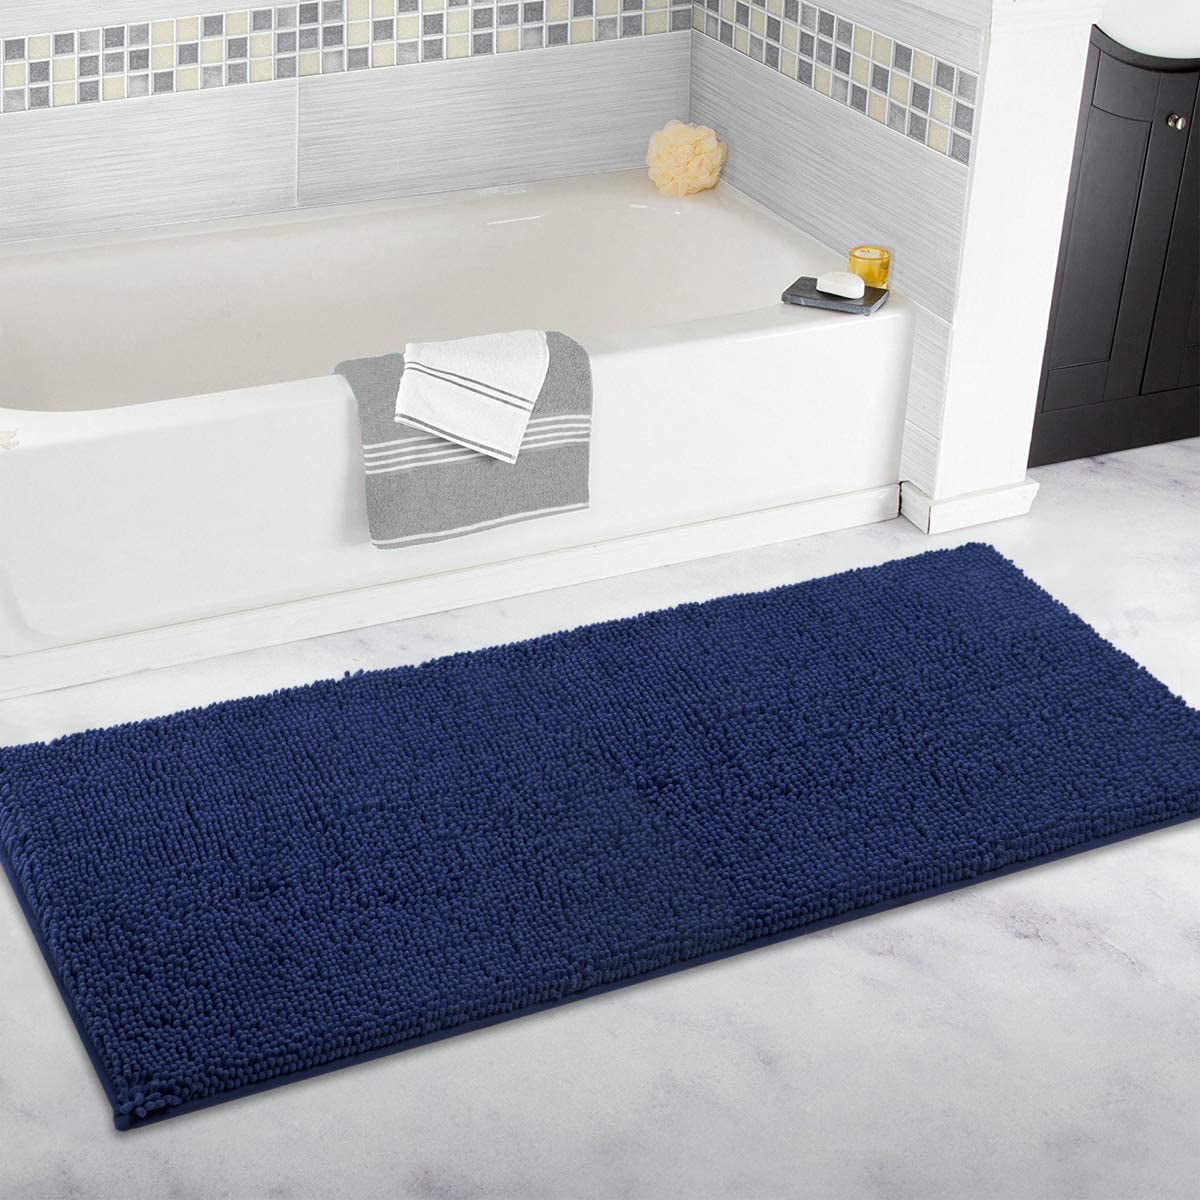 ITSOFT Non Slip Shaggy Chenille Soft Microfibers Runner Large Bath Mat for Bathroom Rug Water